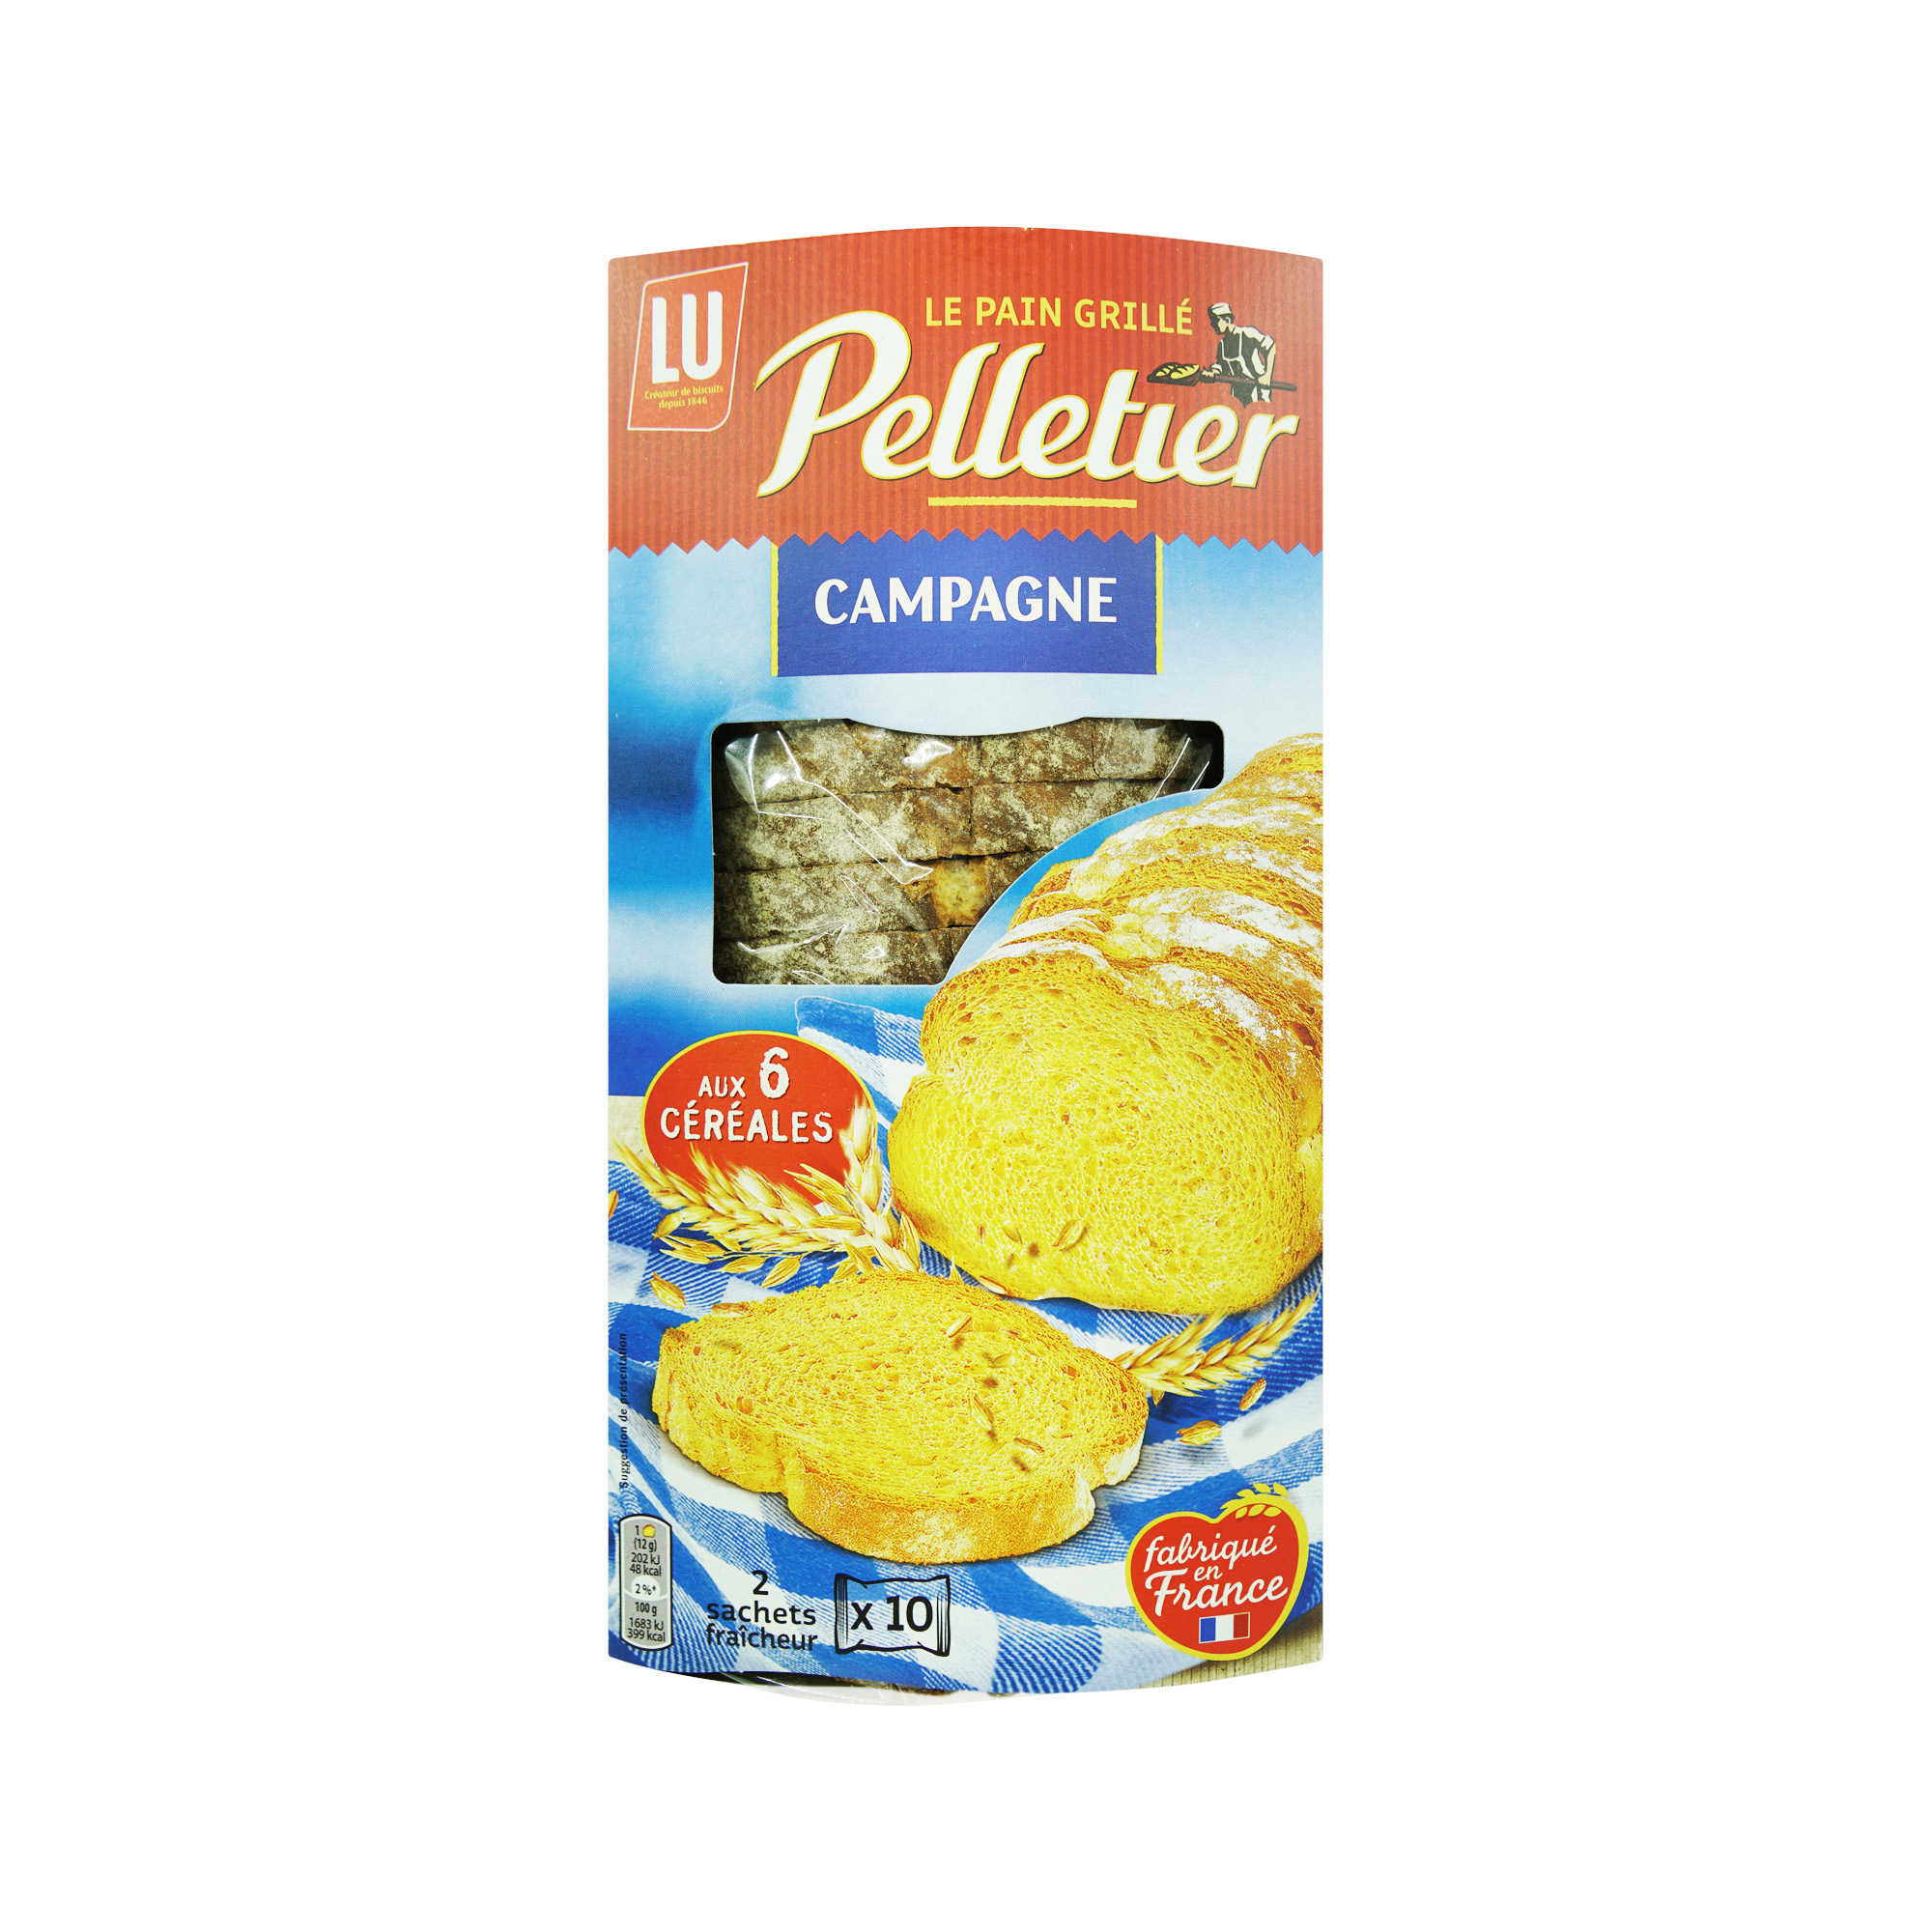 LU Pelletier Campagne Toast 6 Cereals (240g)